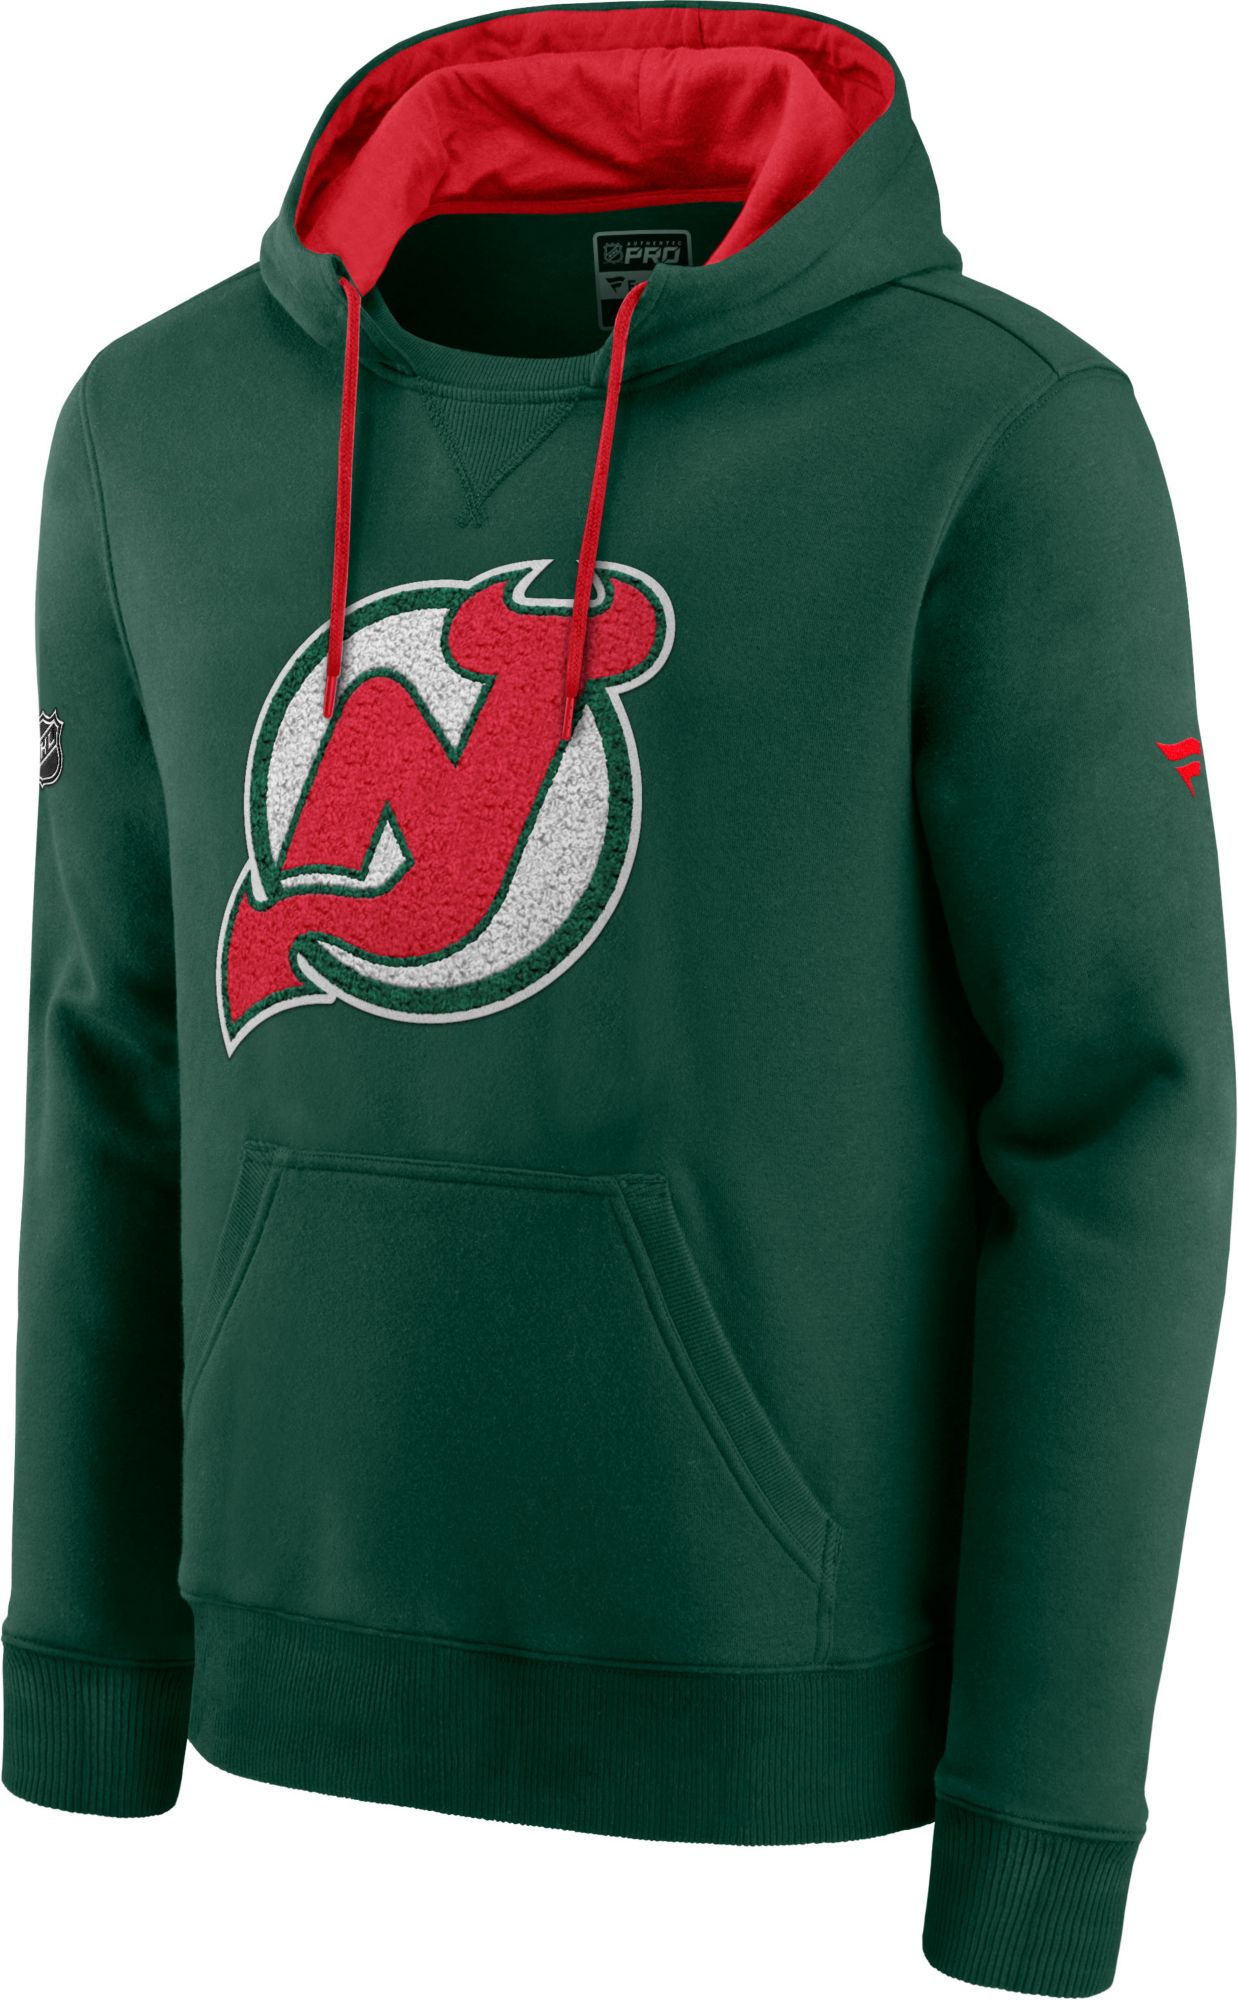 Nhl Philadelphia Flyers Men's Poly Hooded Sweatshirt : Target